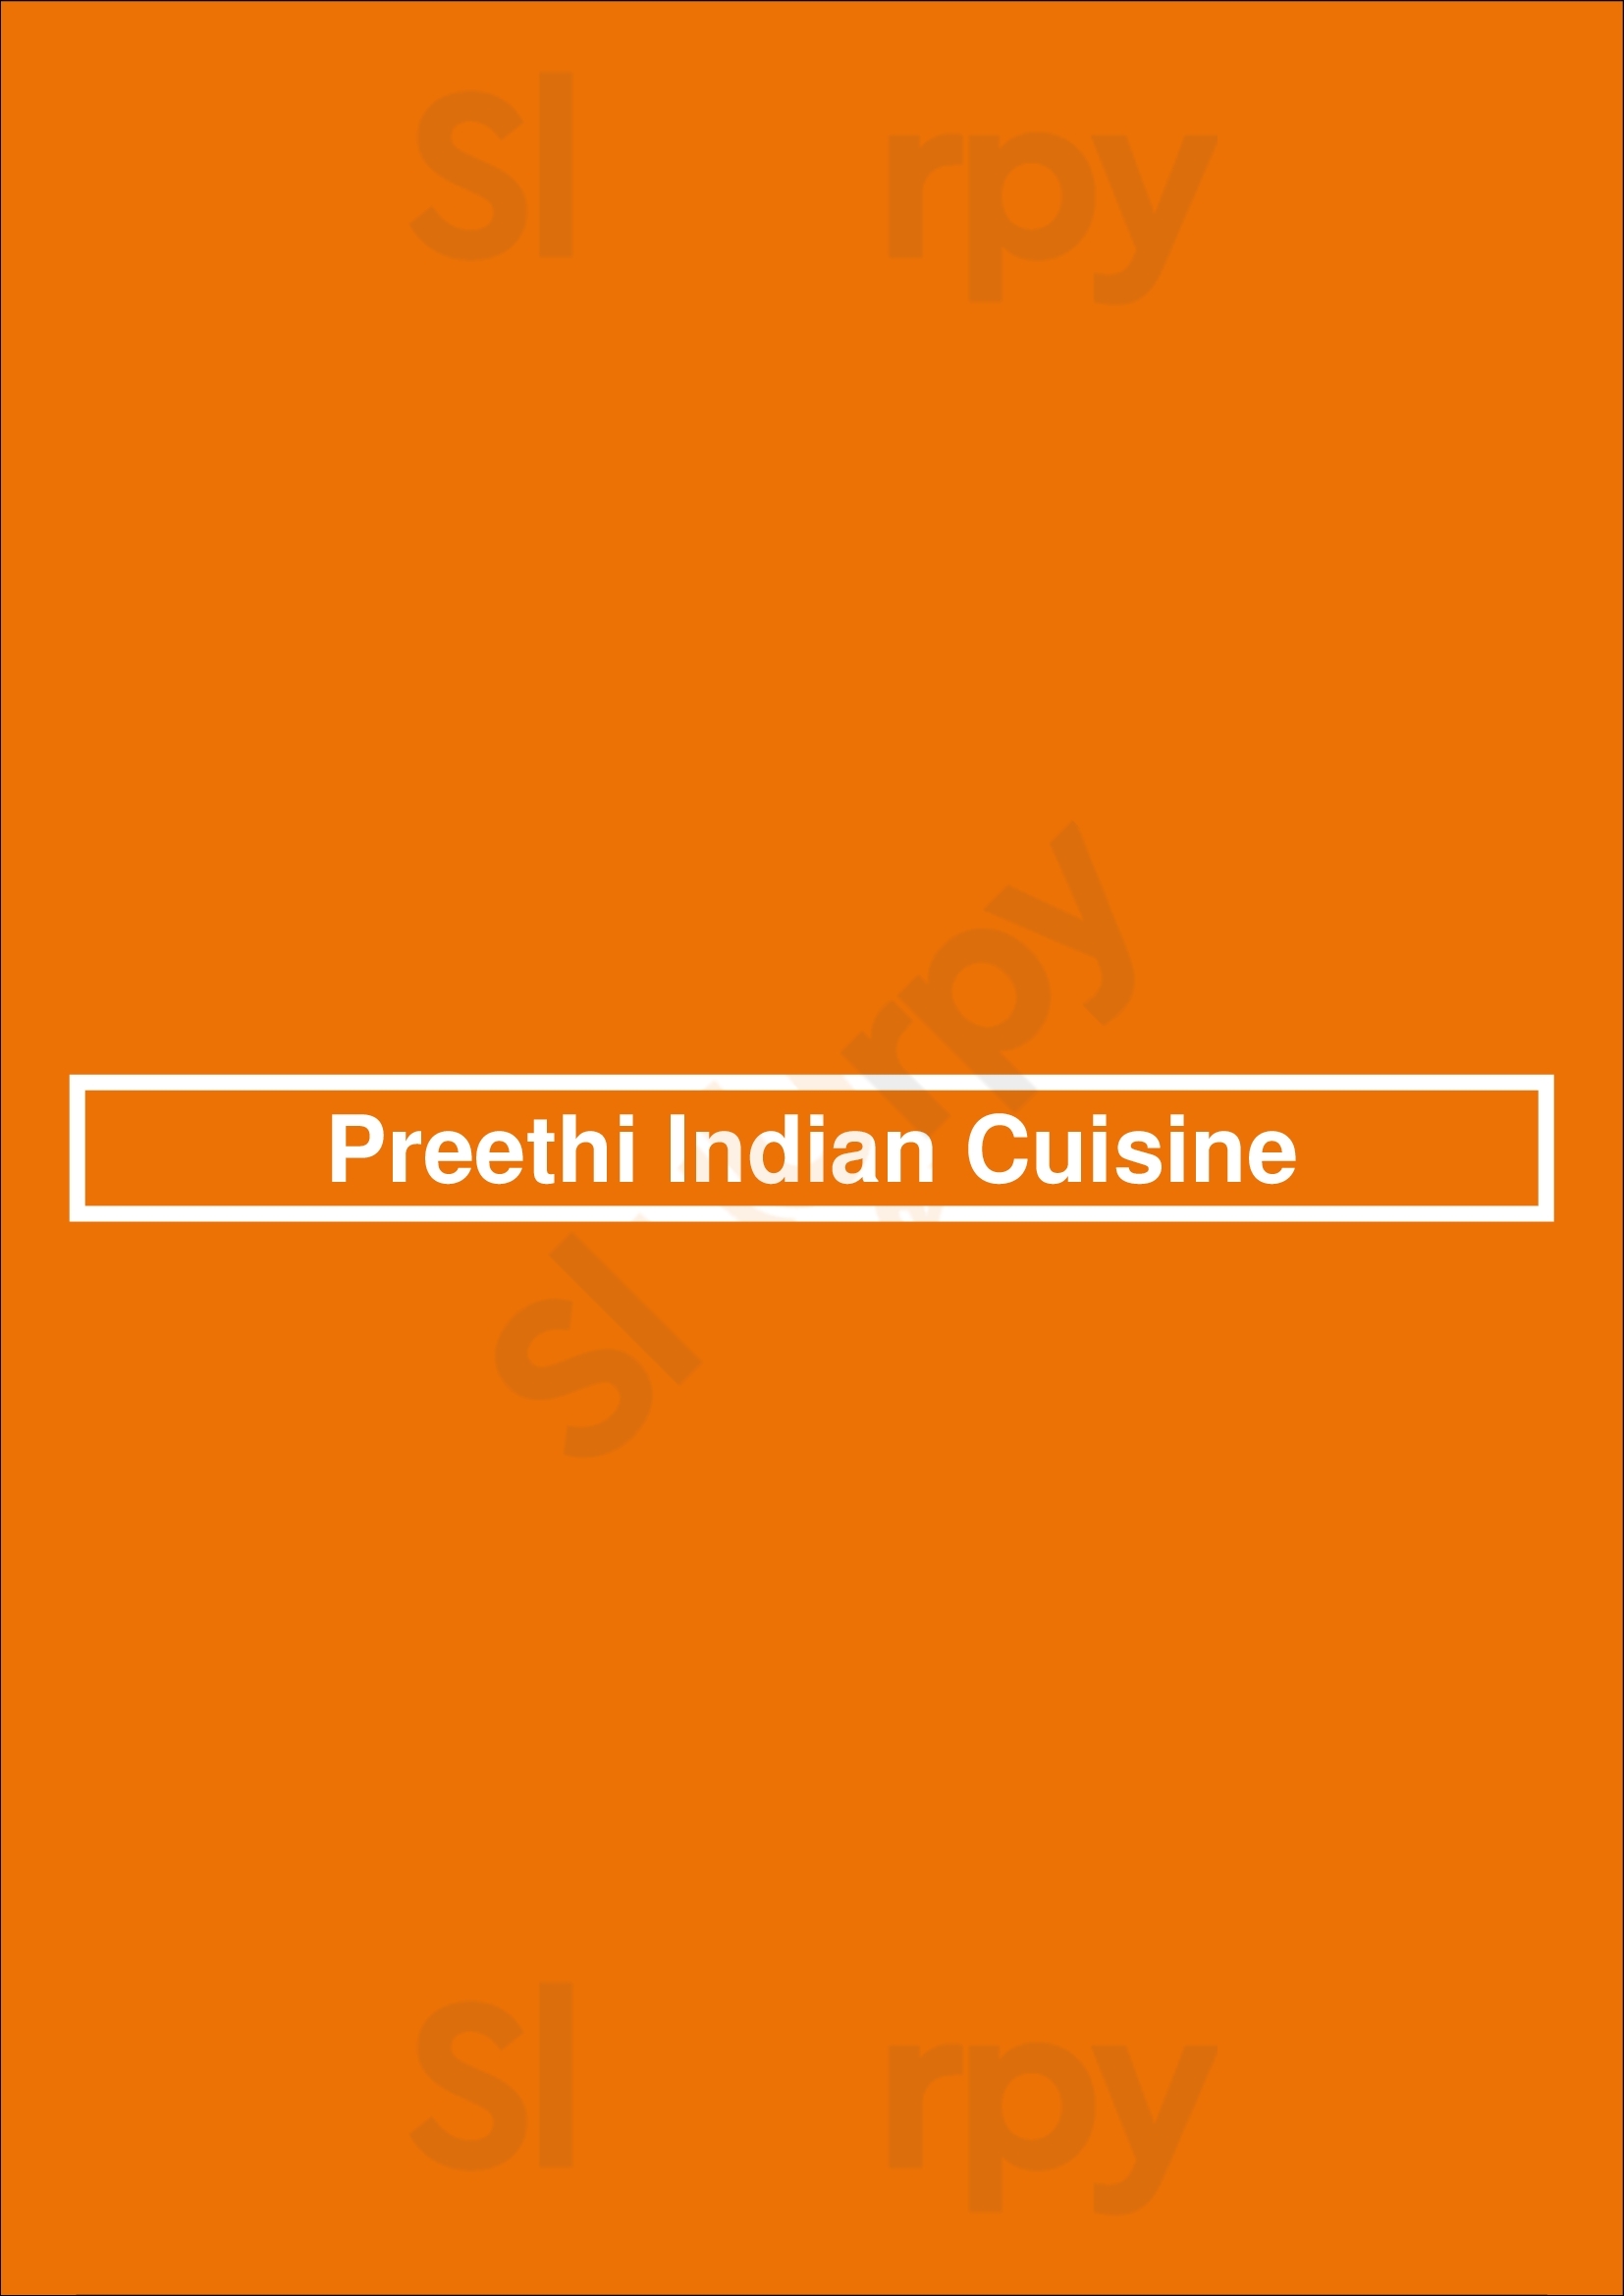 Preethi Indian Cuisine Sacramento Menu - 1